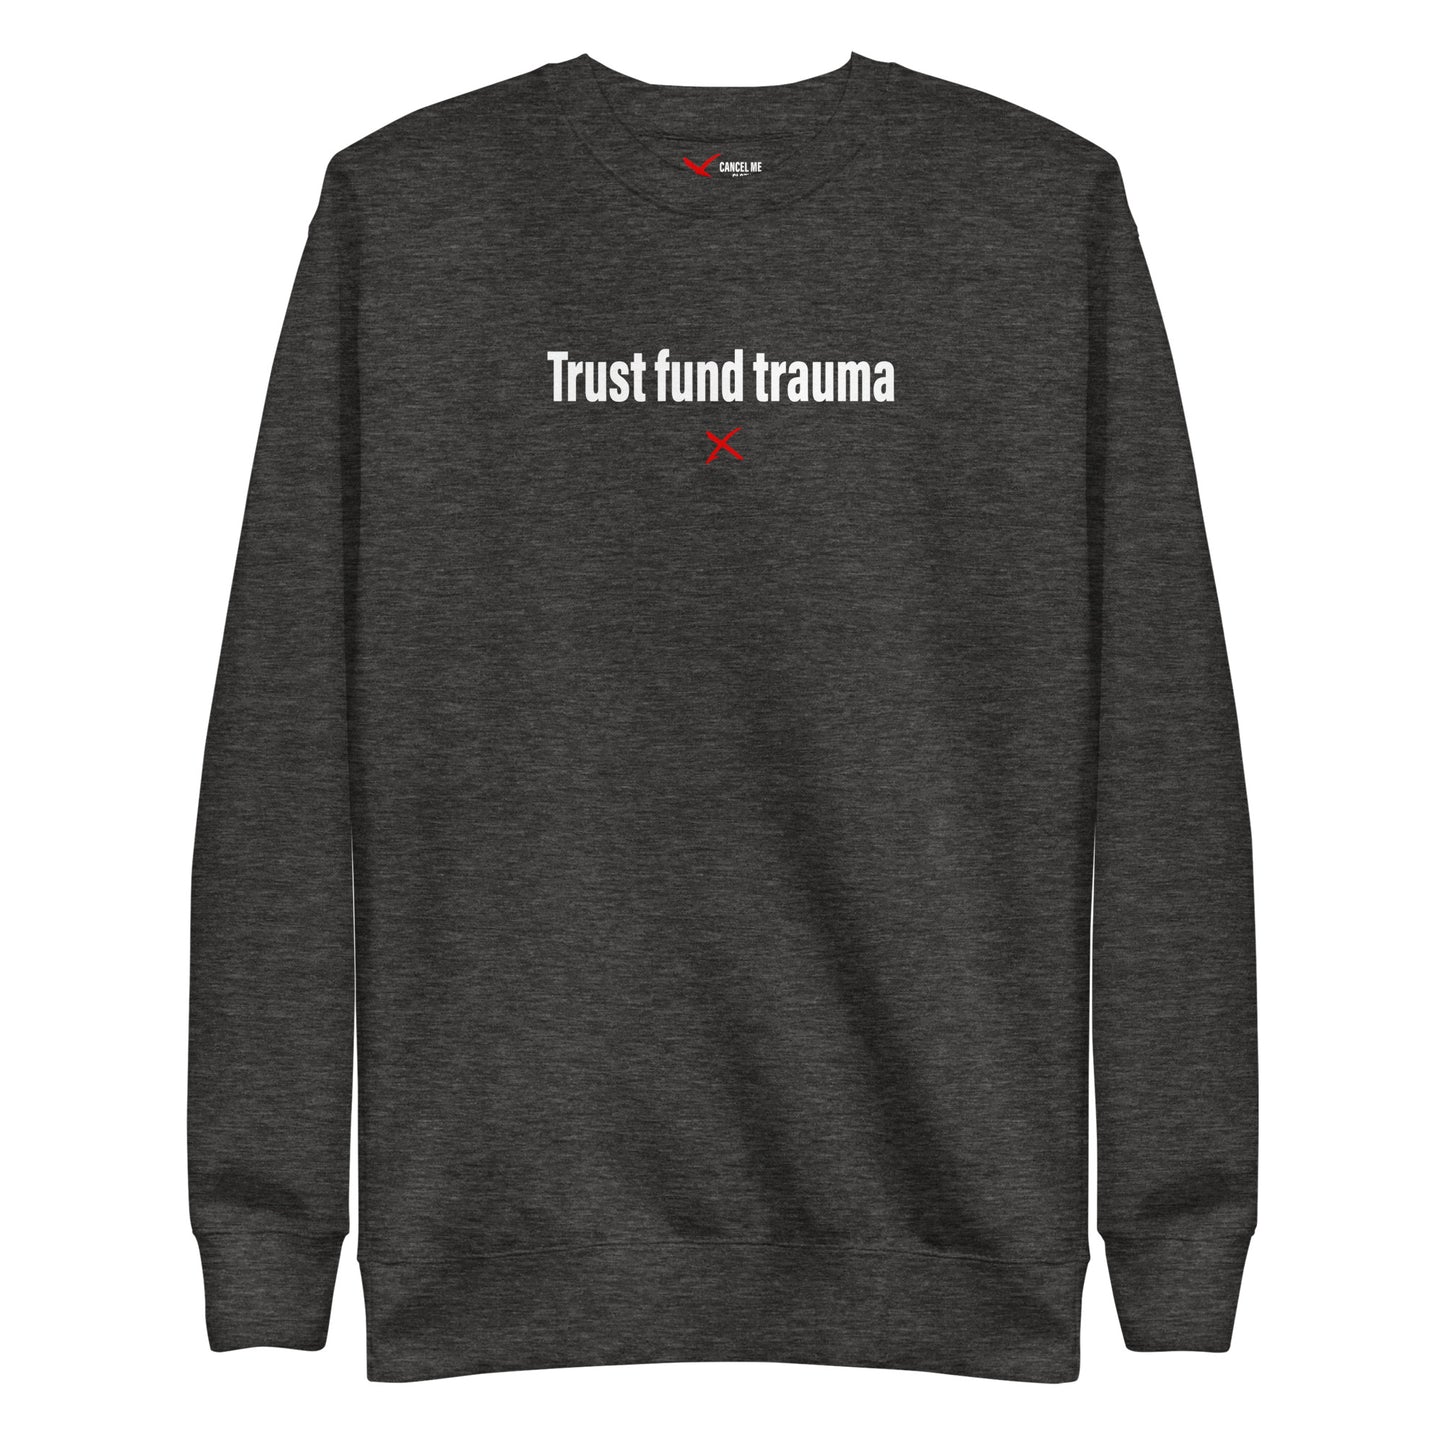 Trust fund trauma - Sweatshirt